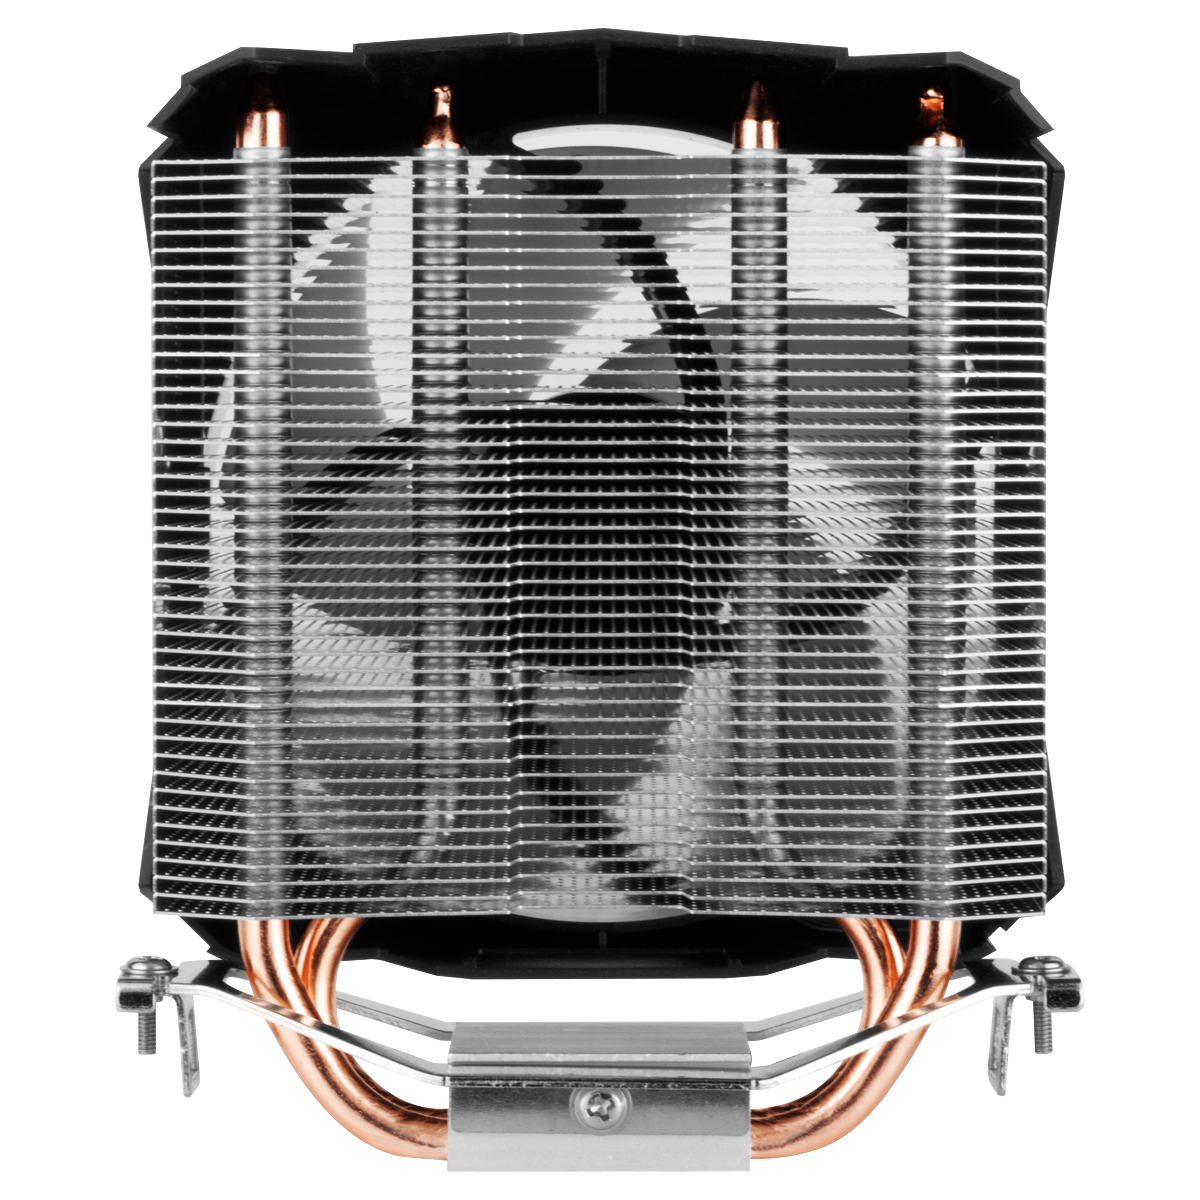 ARCTIC Freezer 7 X Aluminium, black mm) 92 Kühlung, (Tower-Kühler, CPU-Luftkühler